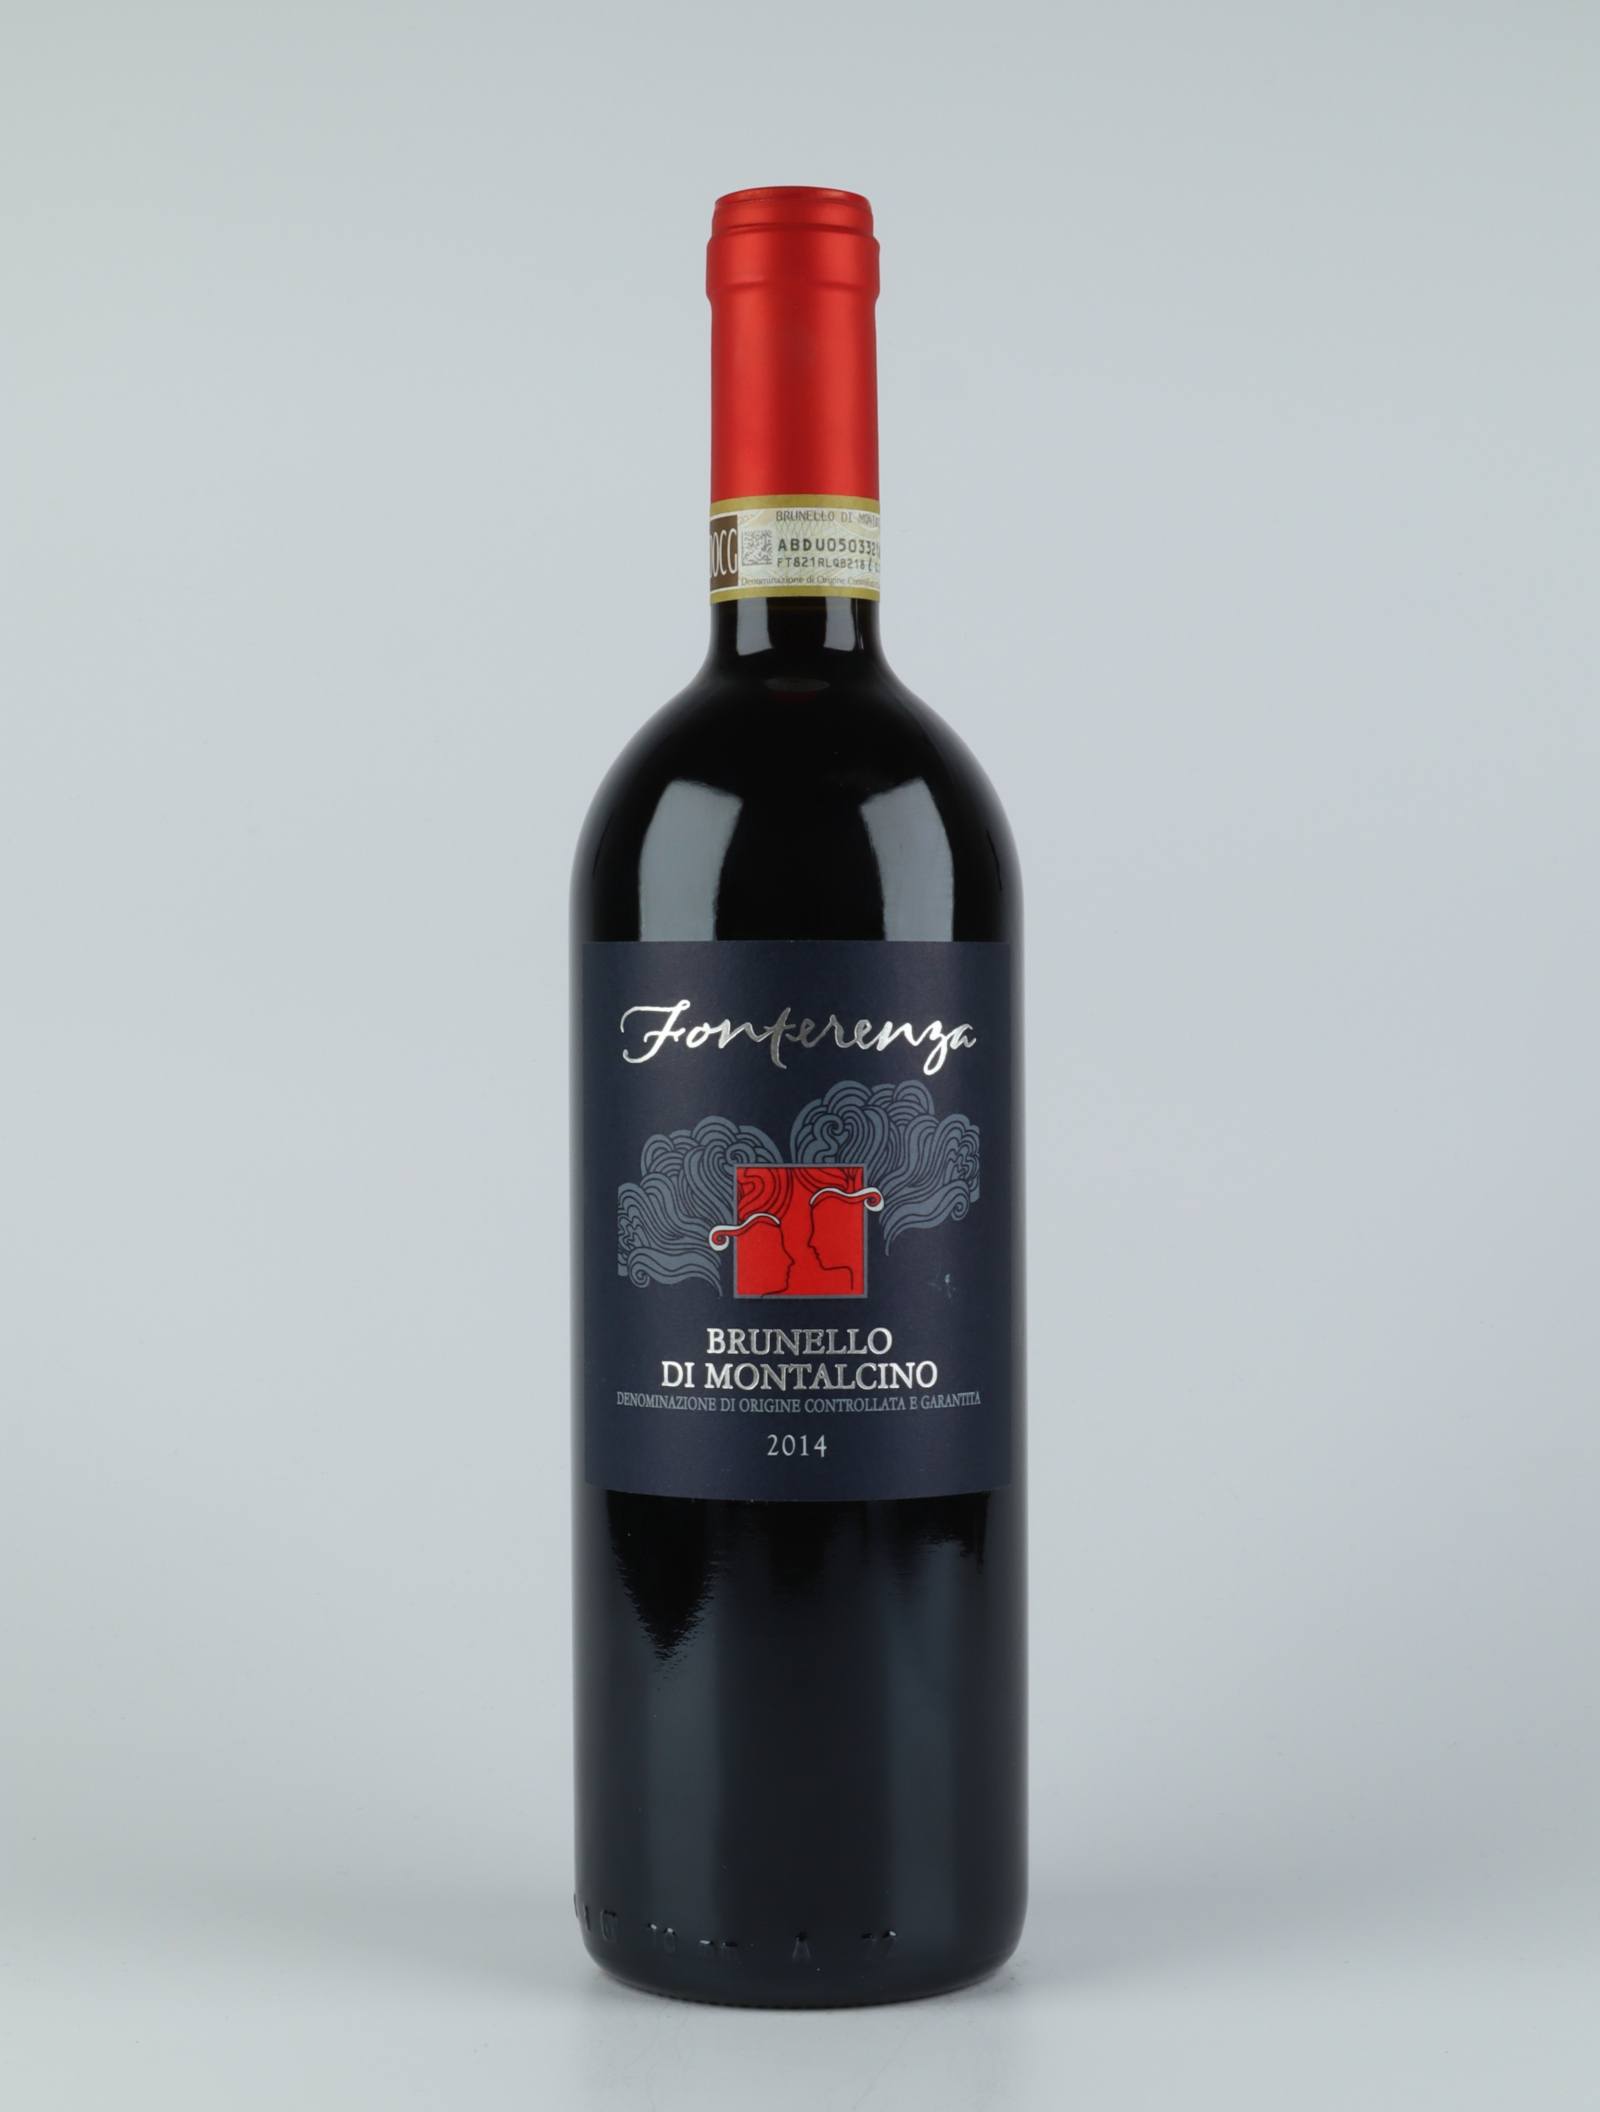 En flaske 2014 Brunello di Montalcino Rødvin fra Fonterenza, Toscana i Italien